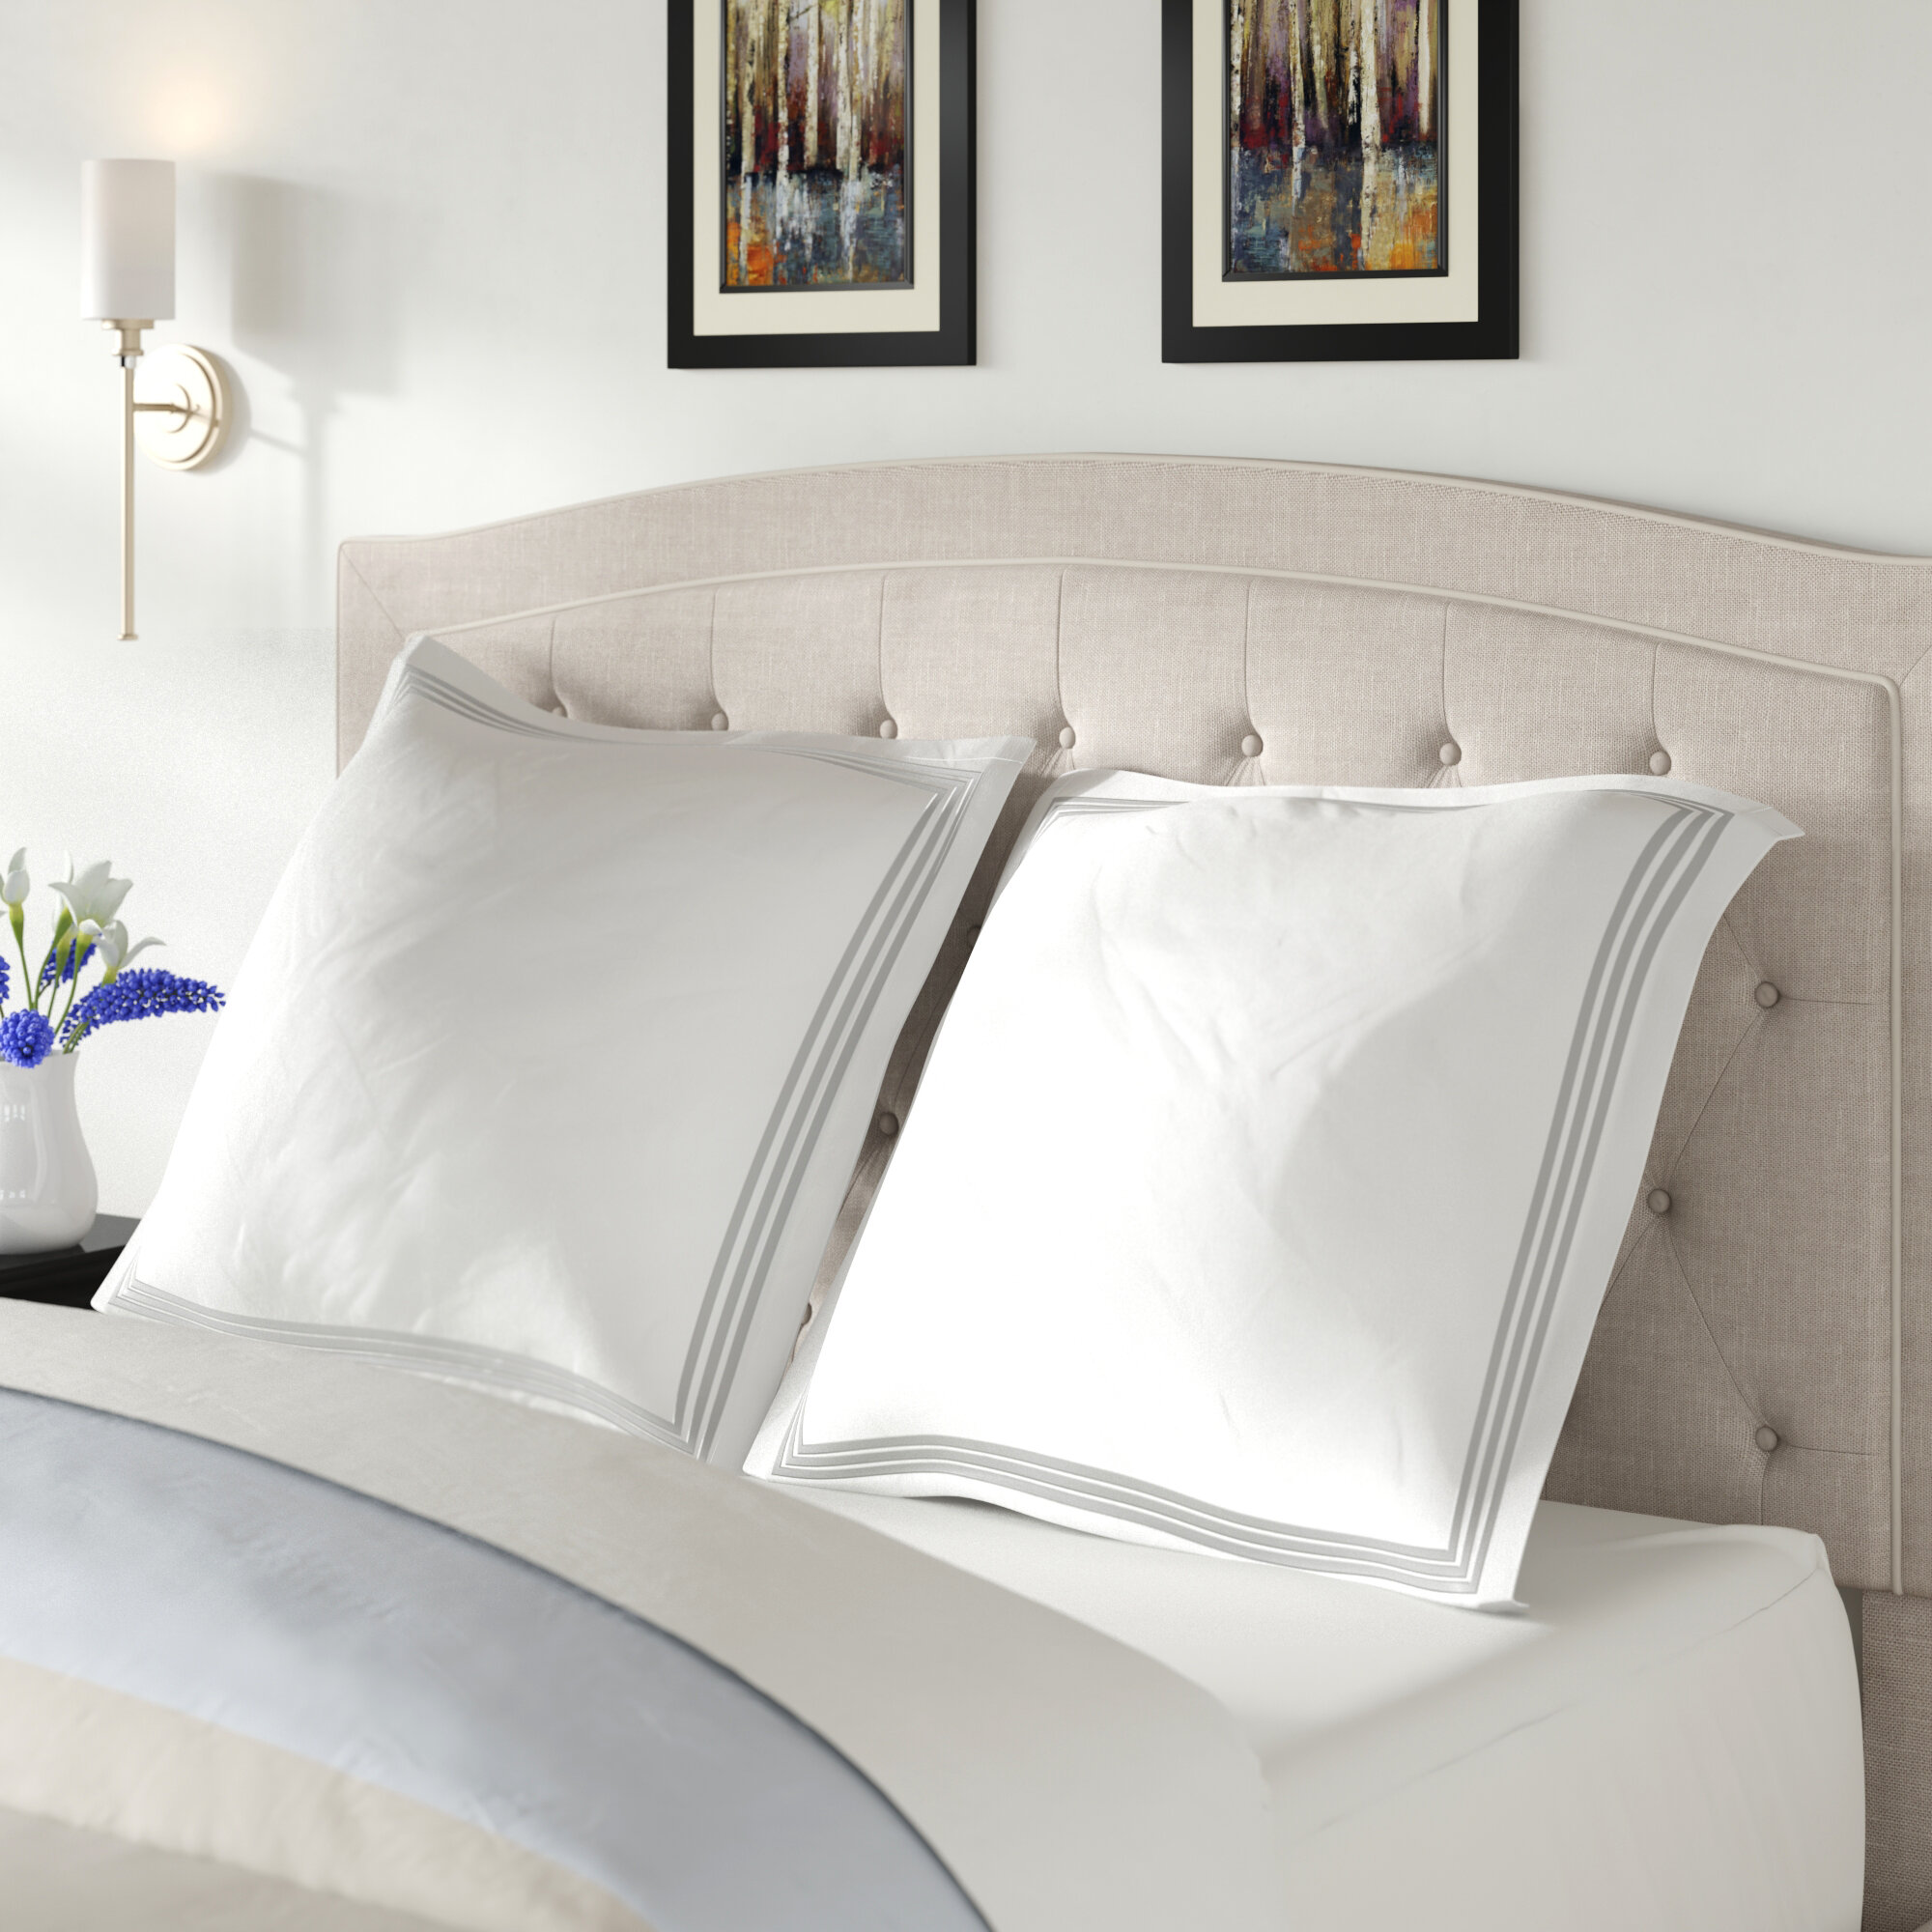 NTBAY Pillow Shams Premium Quality Soft Pillowcases 2 Pack Standard Queen King 